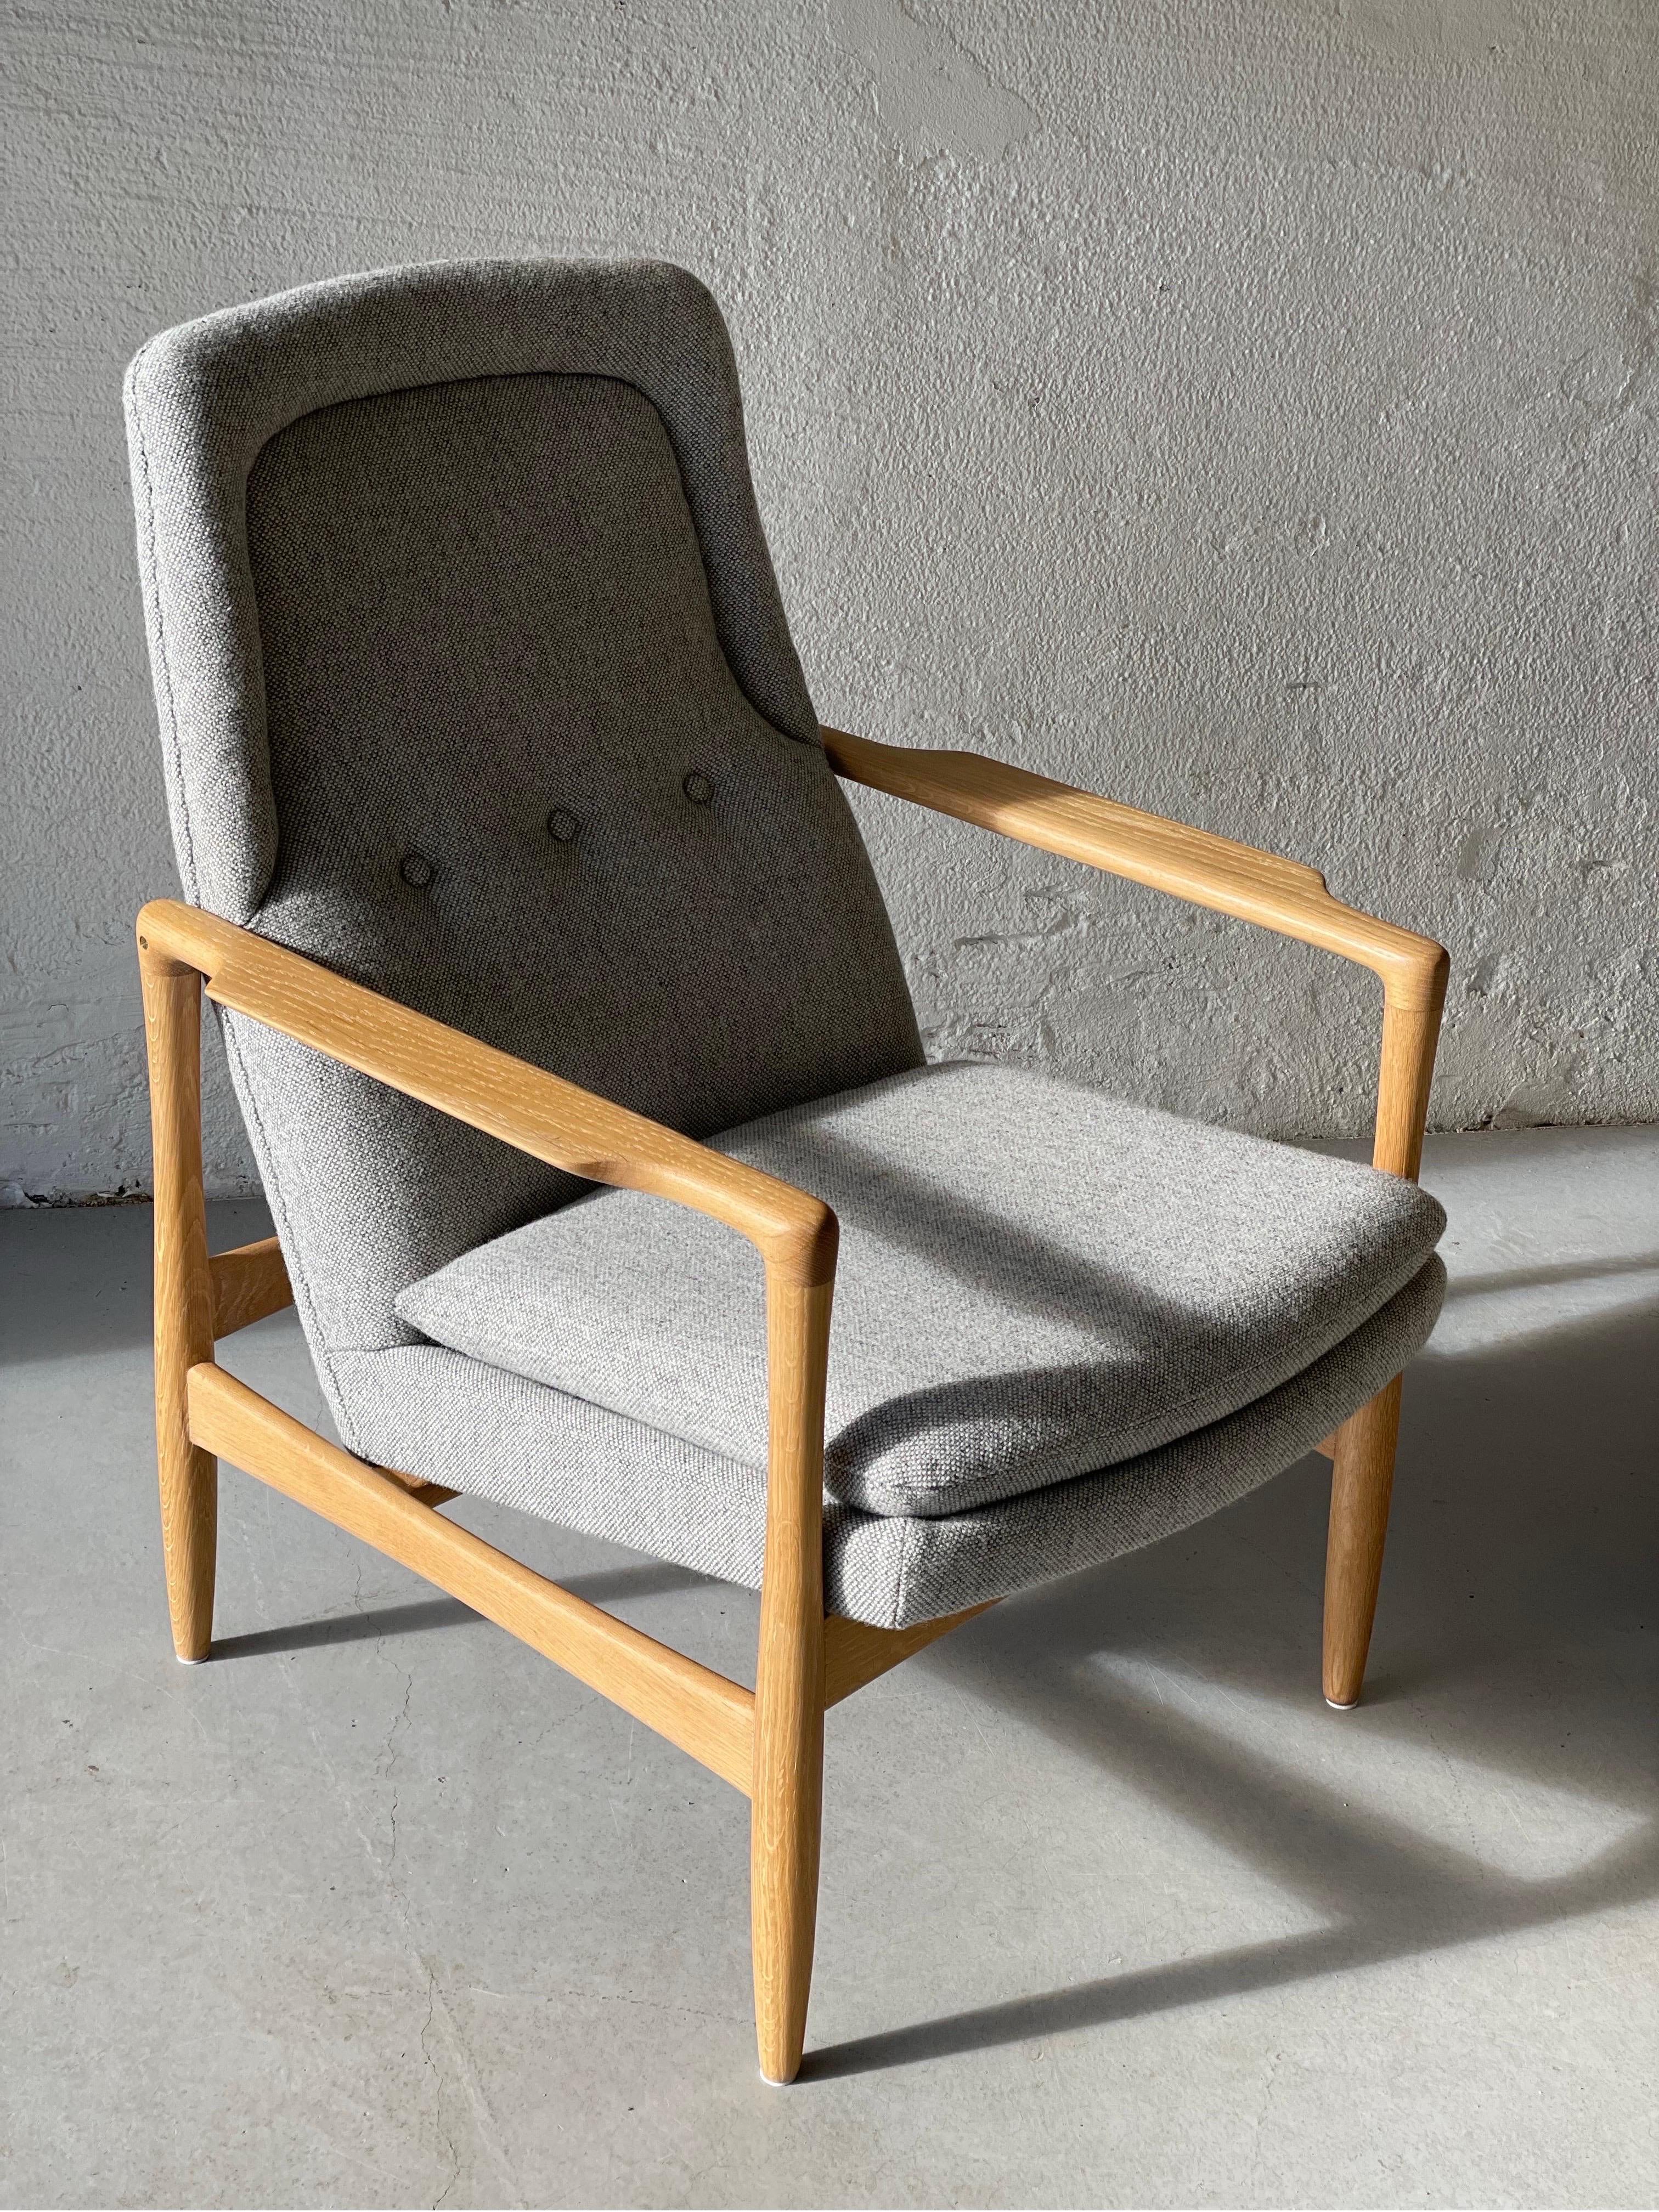 19th Century Norwegian Midcentury - Modern chairs, Torbjørn Afdal, 1957